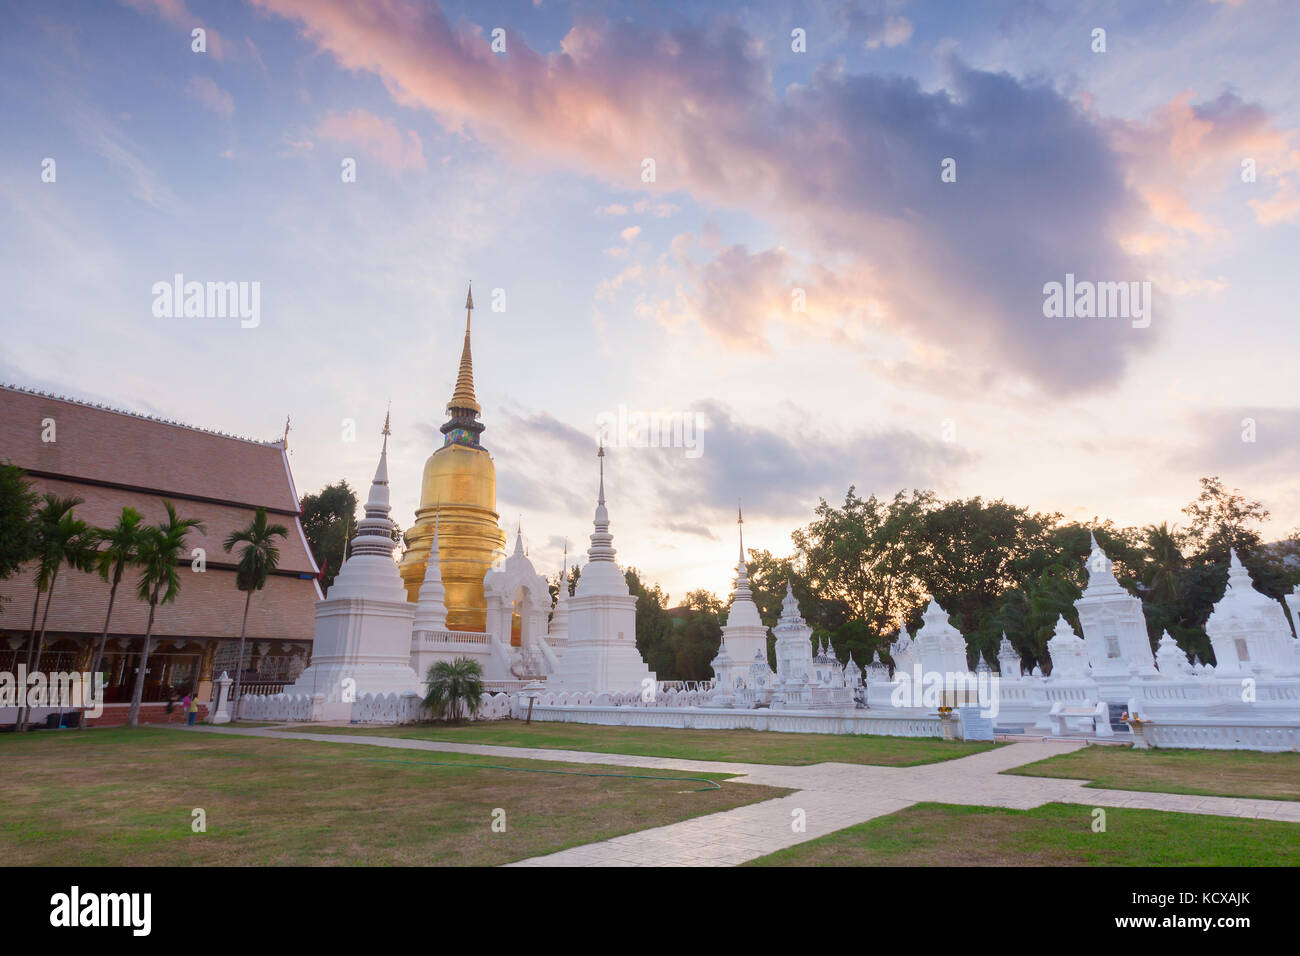 Suan dok temple  beautiful temple in chiangmai,Thailand Stock Photo